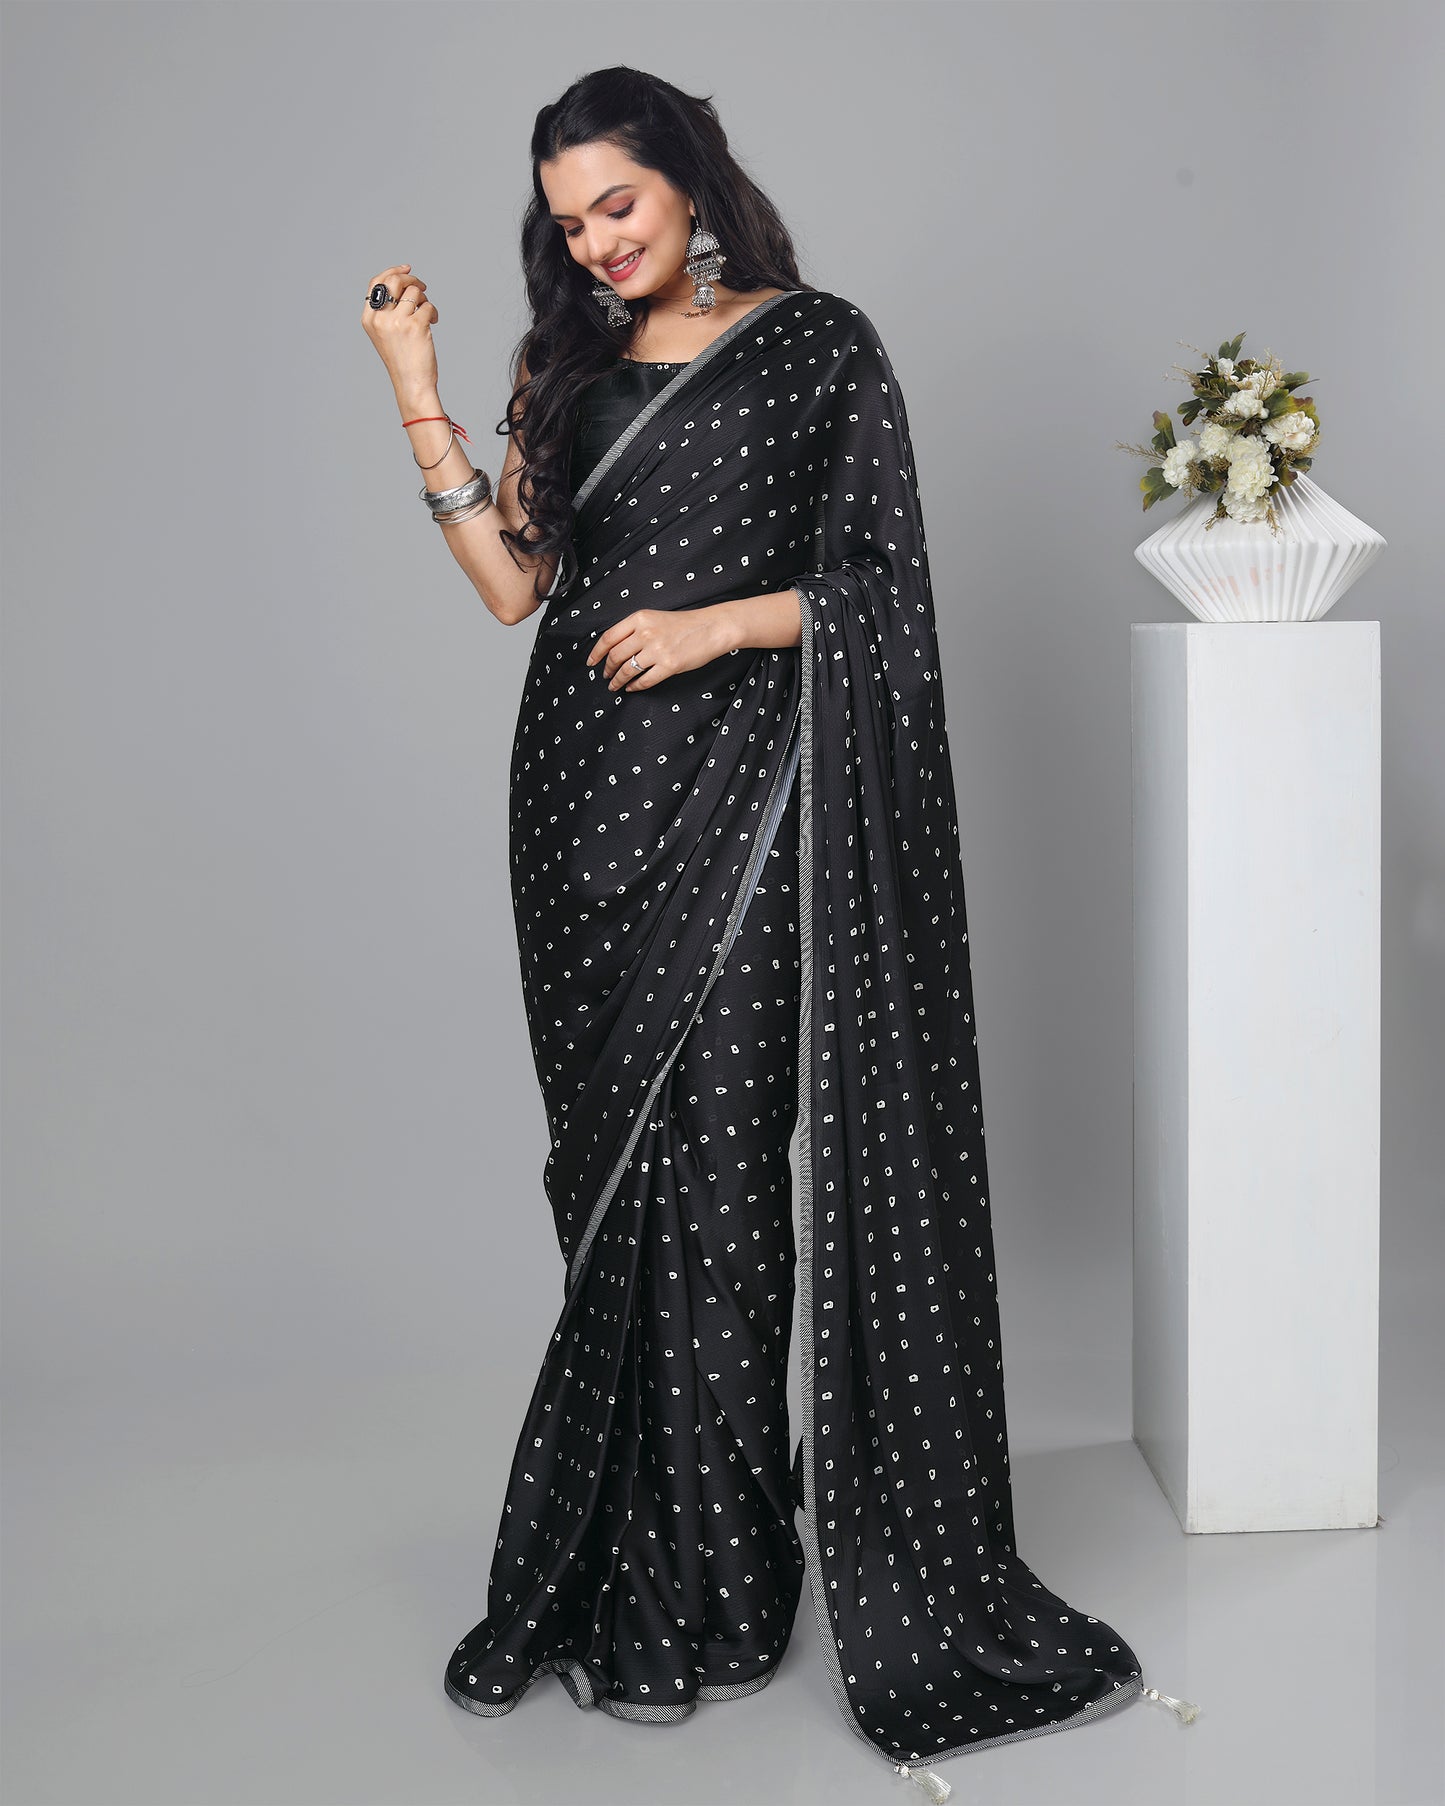 Exclusive Bandhni Women's Designer Bollywood Pre-Draped Saree